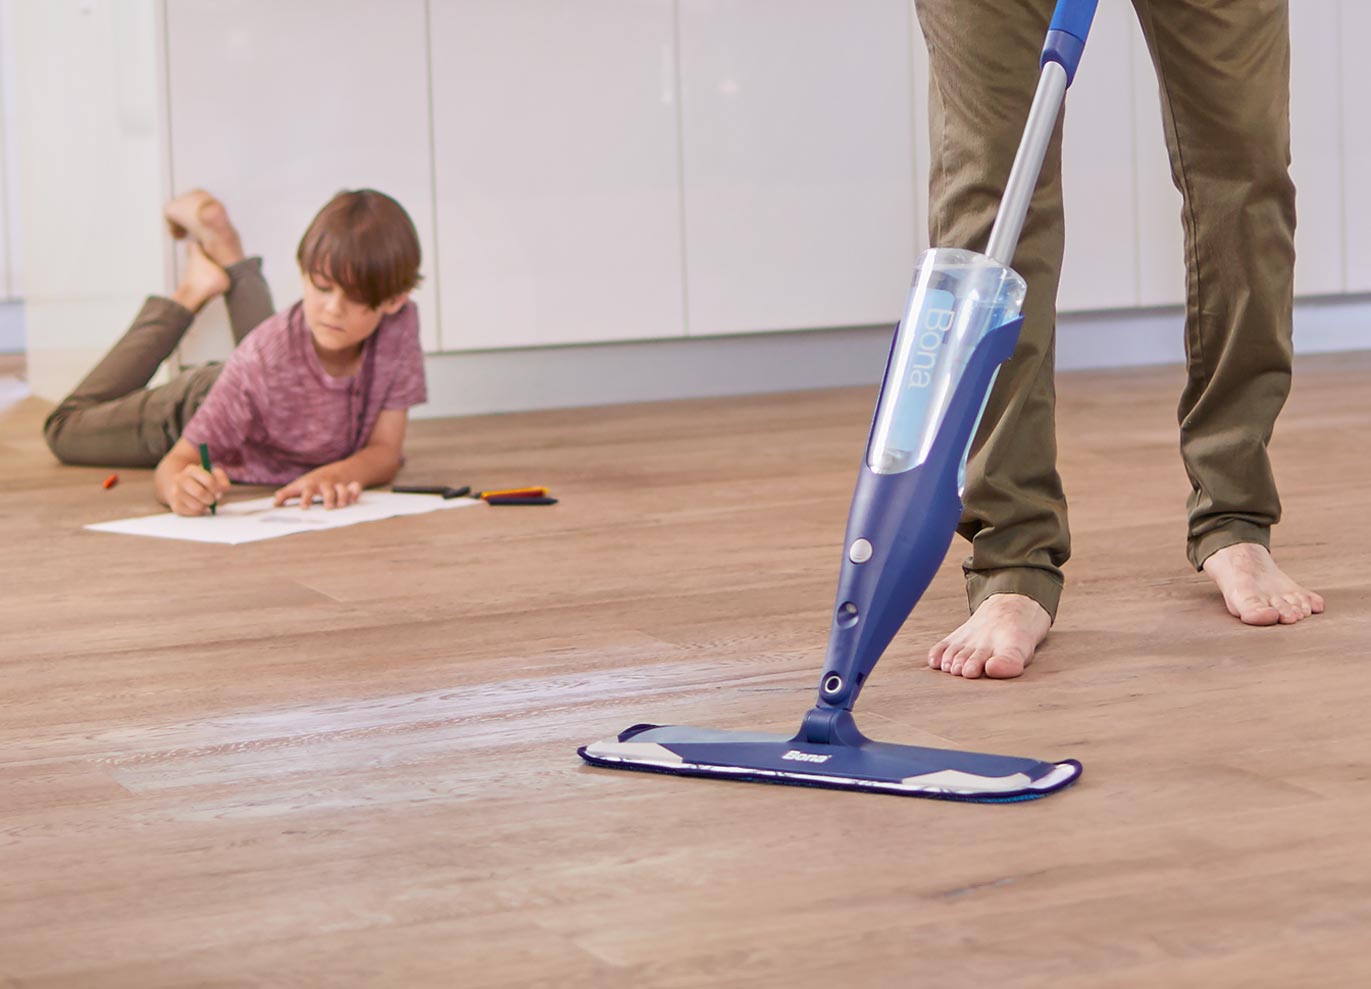 How To Clean Hardwood Floors Bona Us, How Often Should You Clean Hardwood Floors With Bona